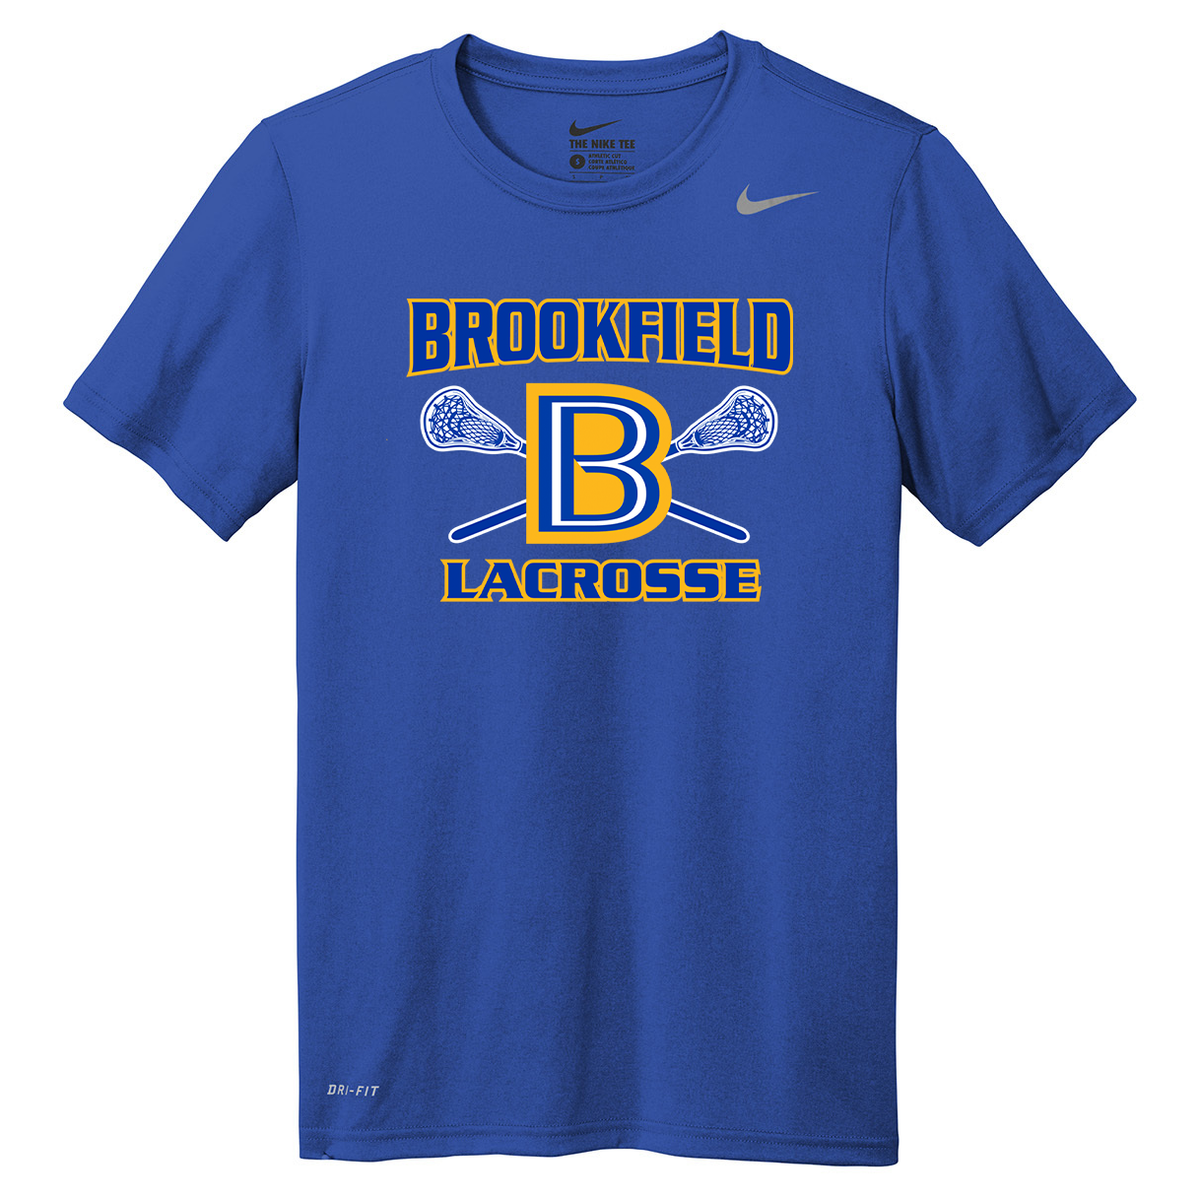 Brookfield Lacrosse Nike Legend Tee